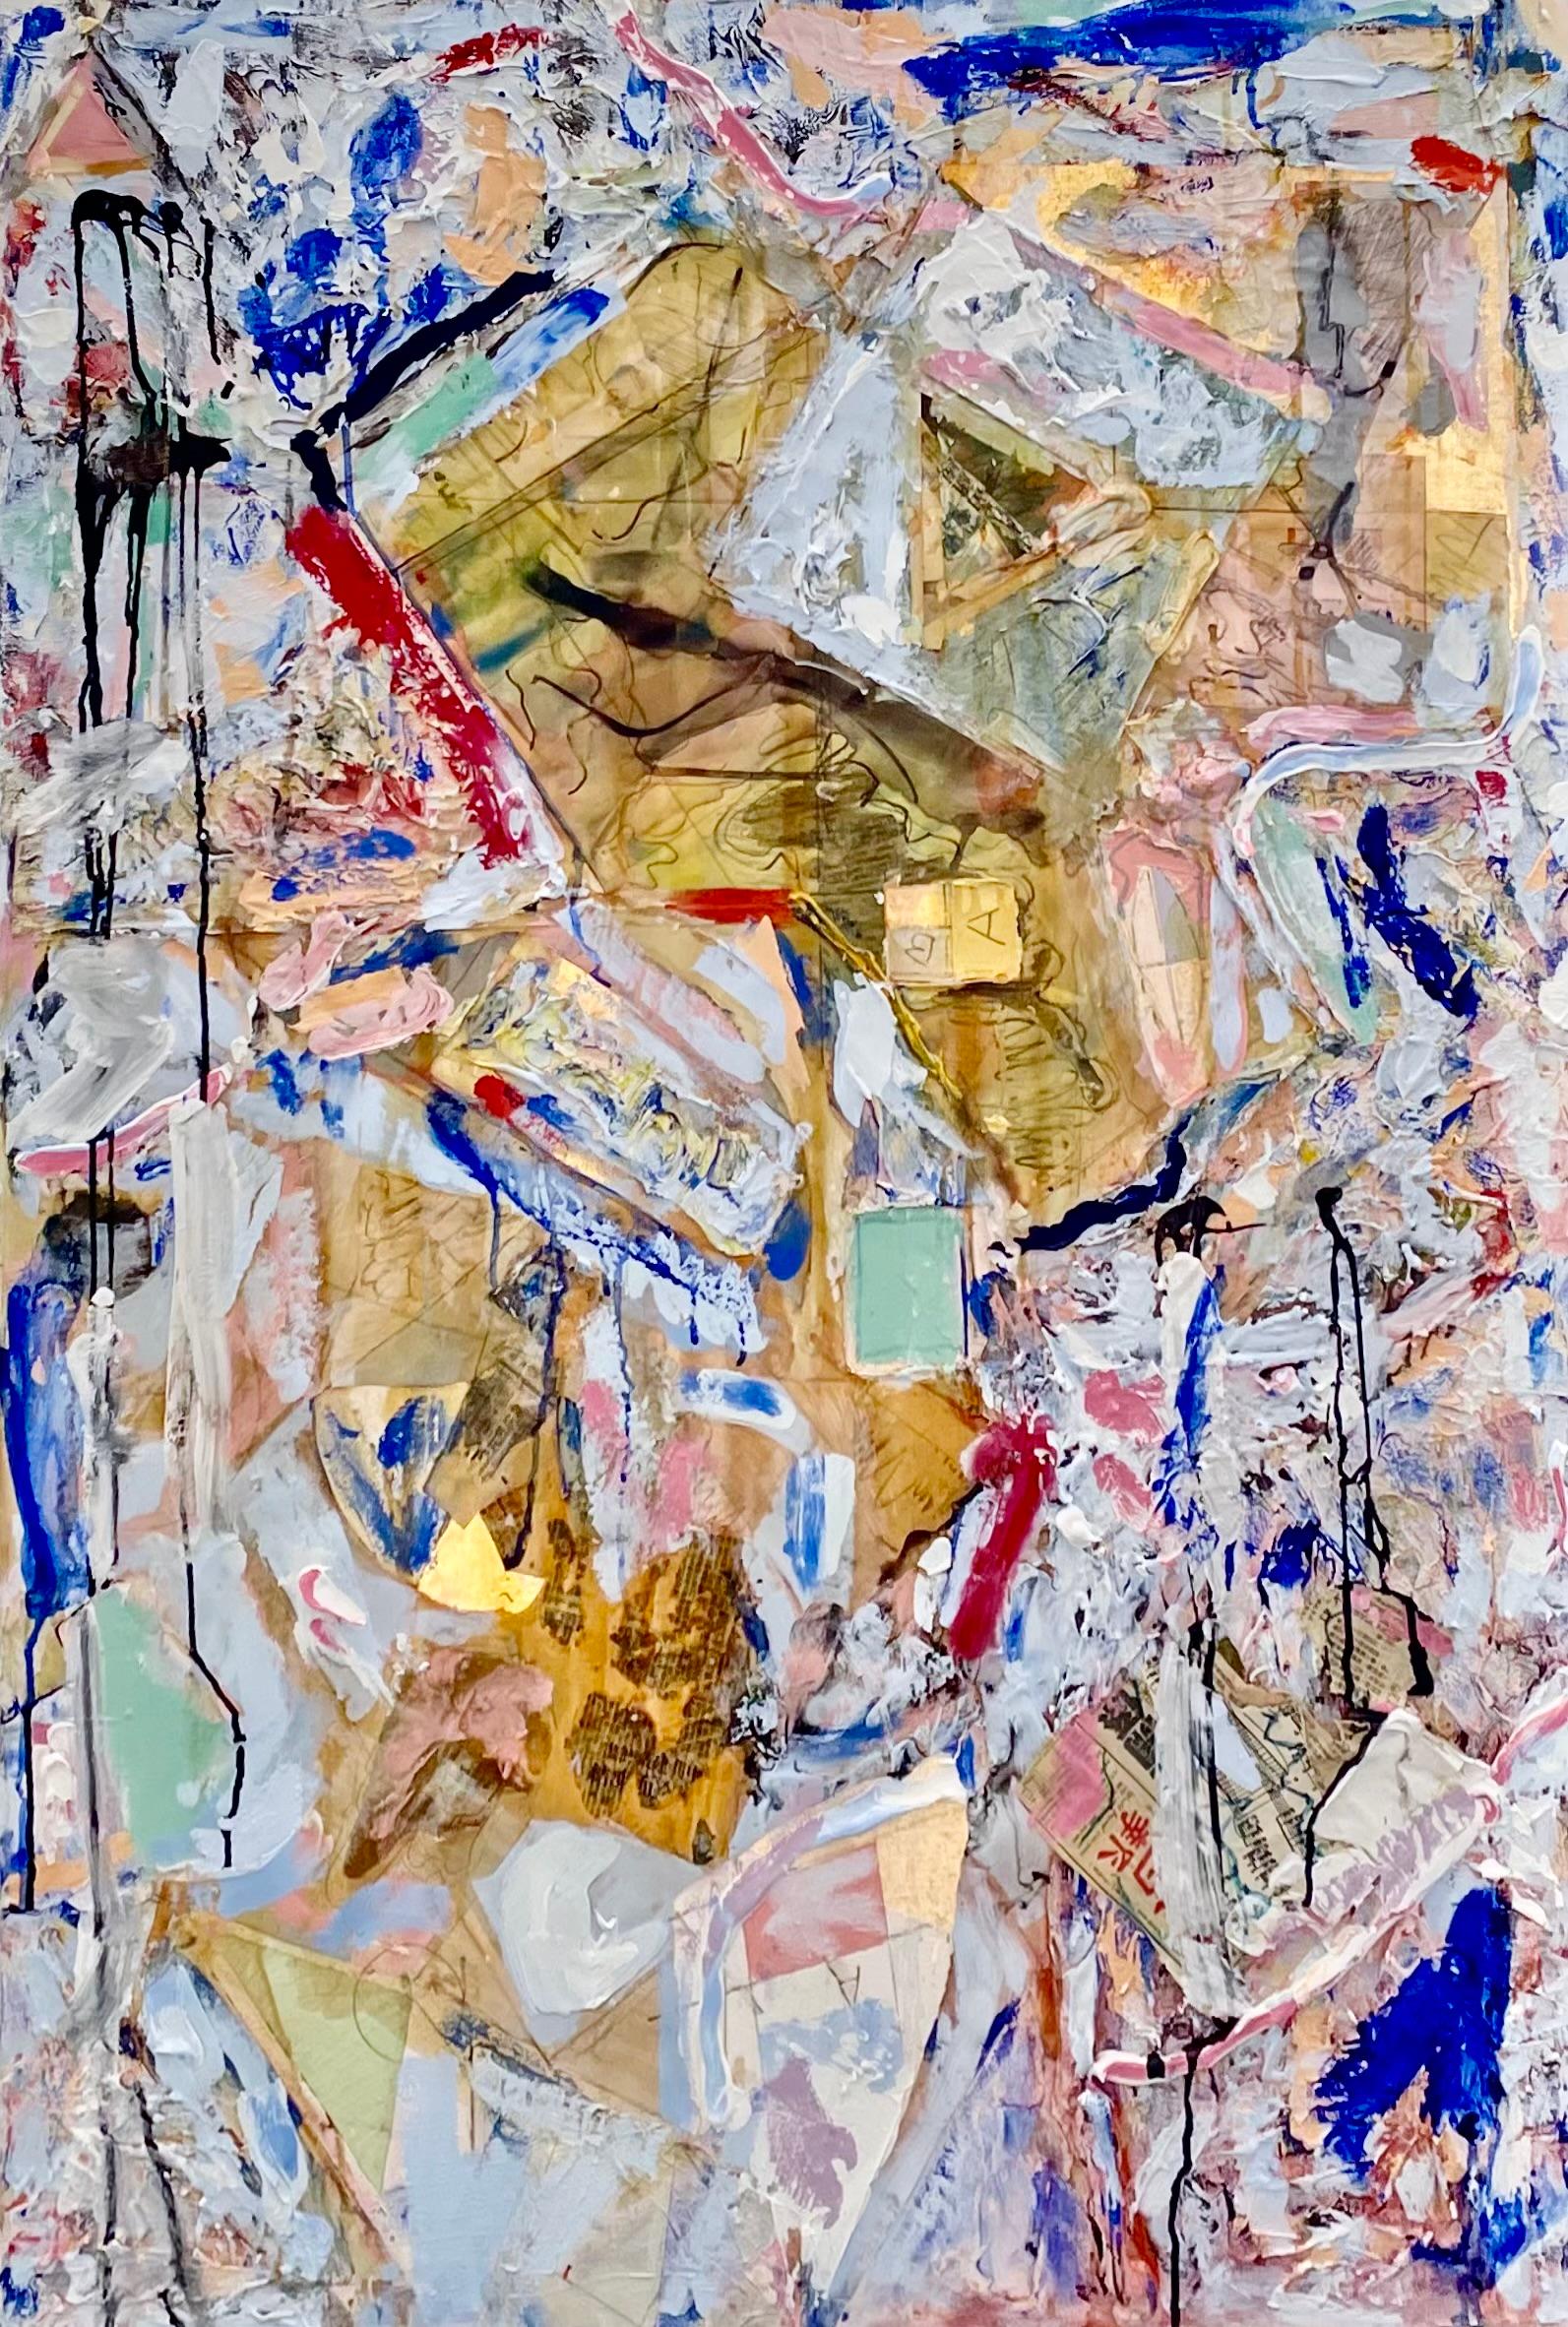 Steven H. Rehfeld Abstract Painting – "Kongruenz" Blau und Rosa Mixed Media Contemporary Abstract von Steven Rehfeld